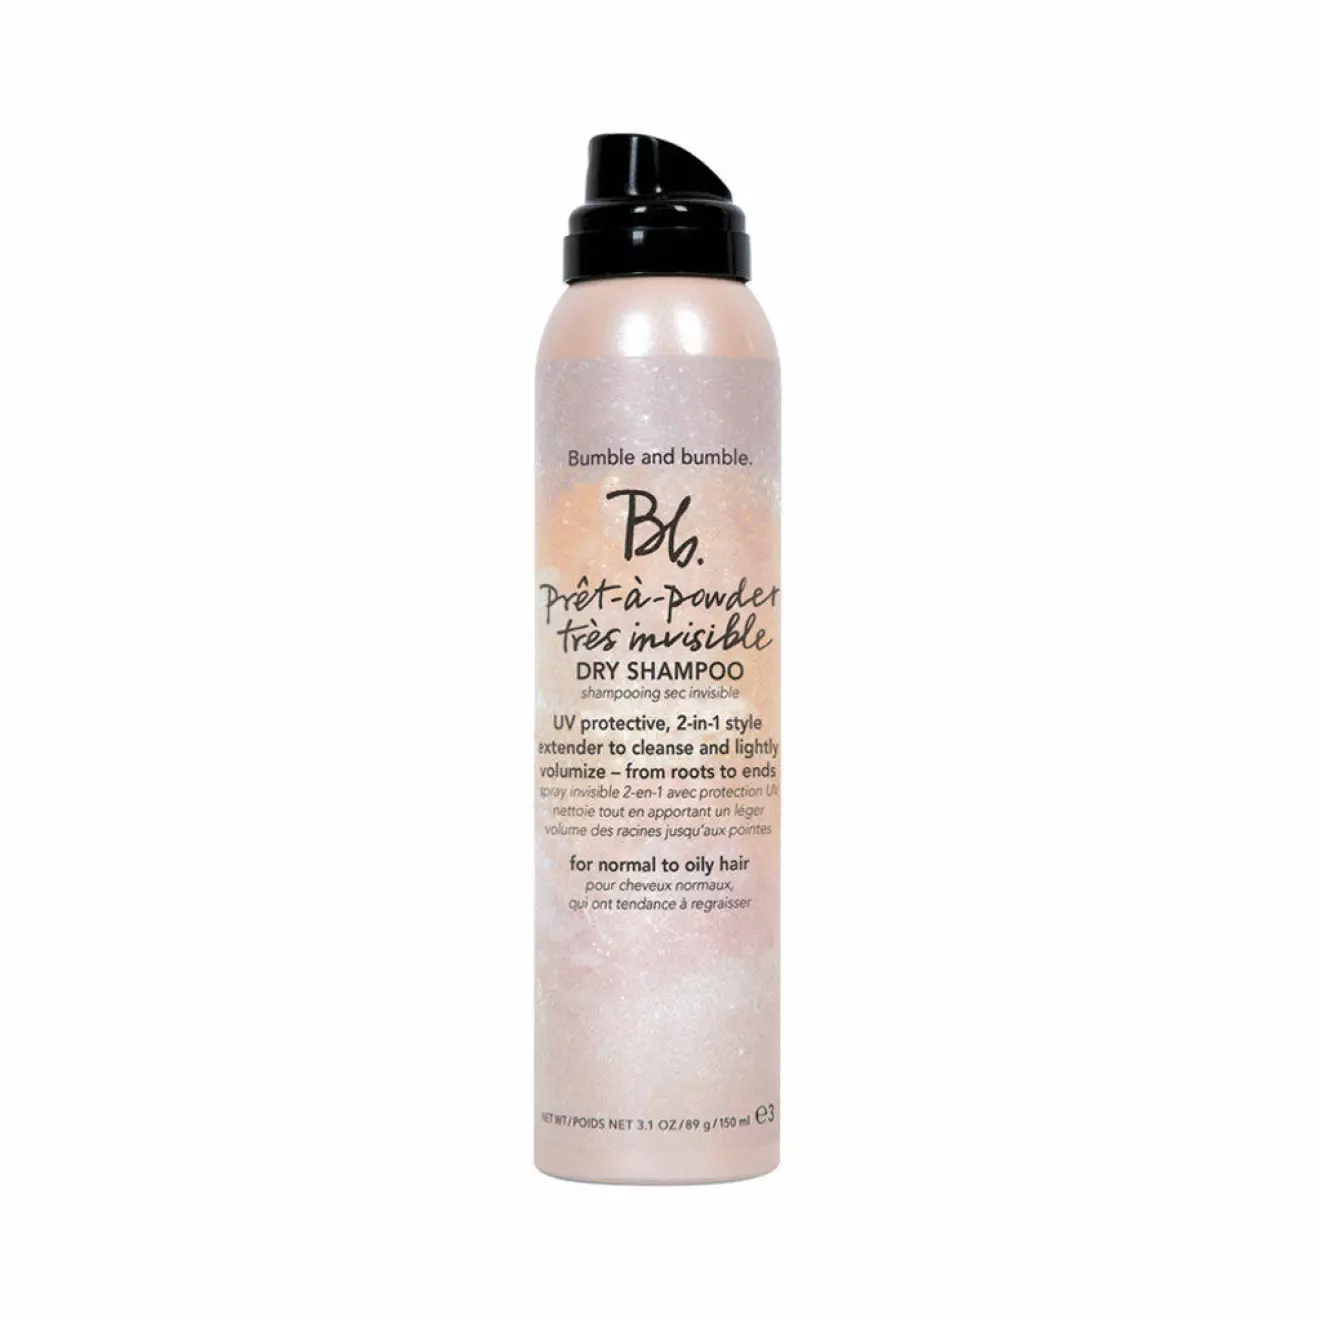 En bild på ett torrshampo, produkten Bumble & Bumble – Bb.Prêt-à-powder Tres Invisible Dry Shampoo.